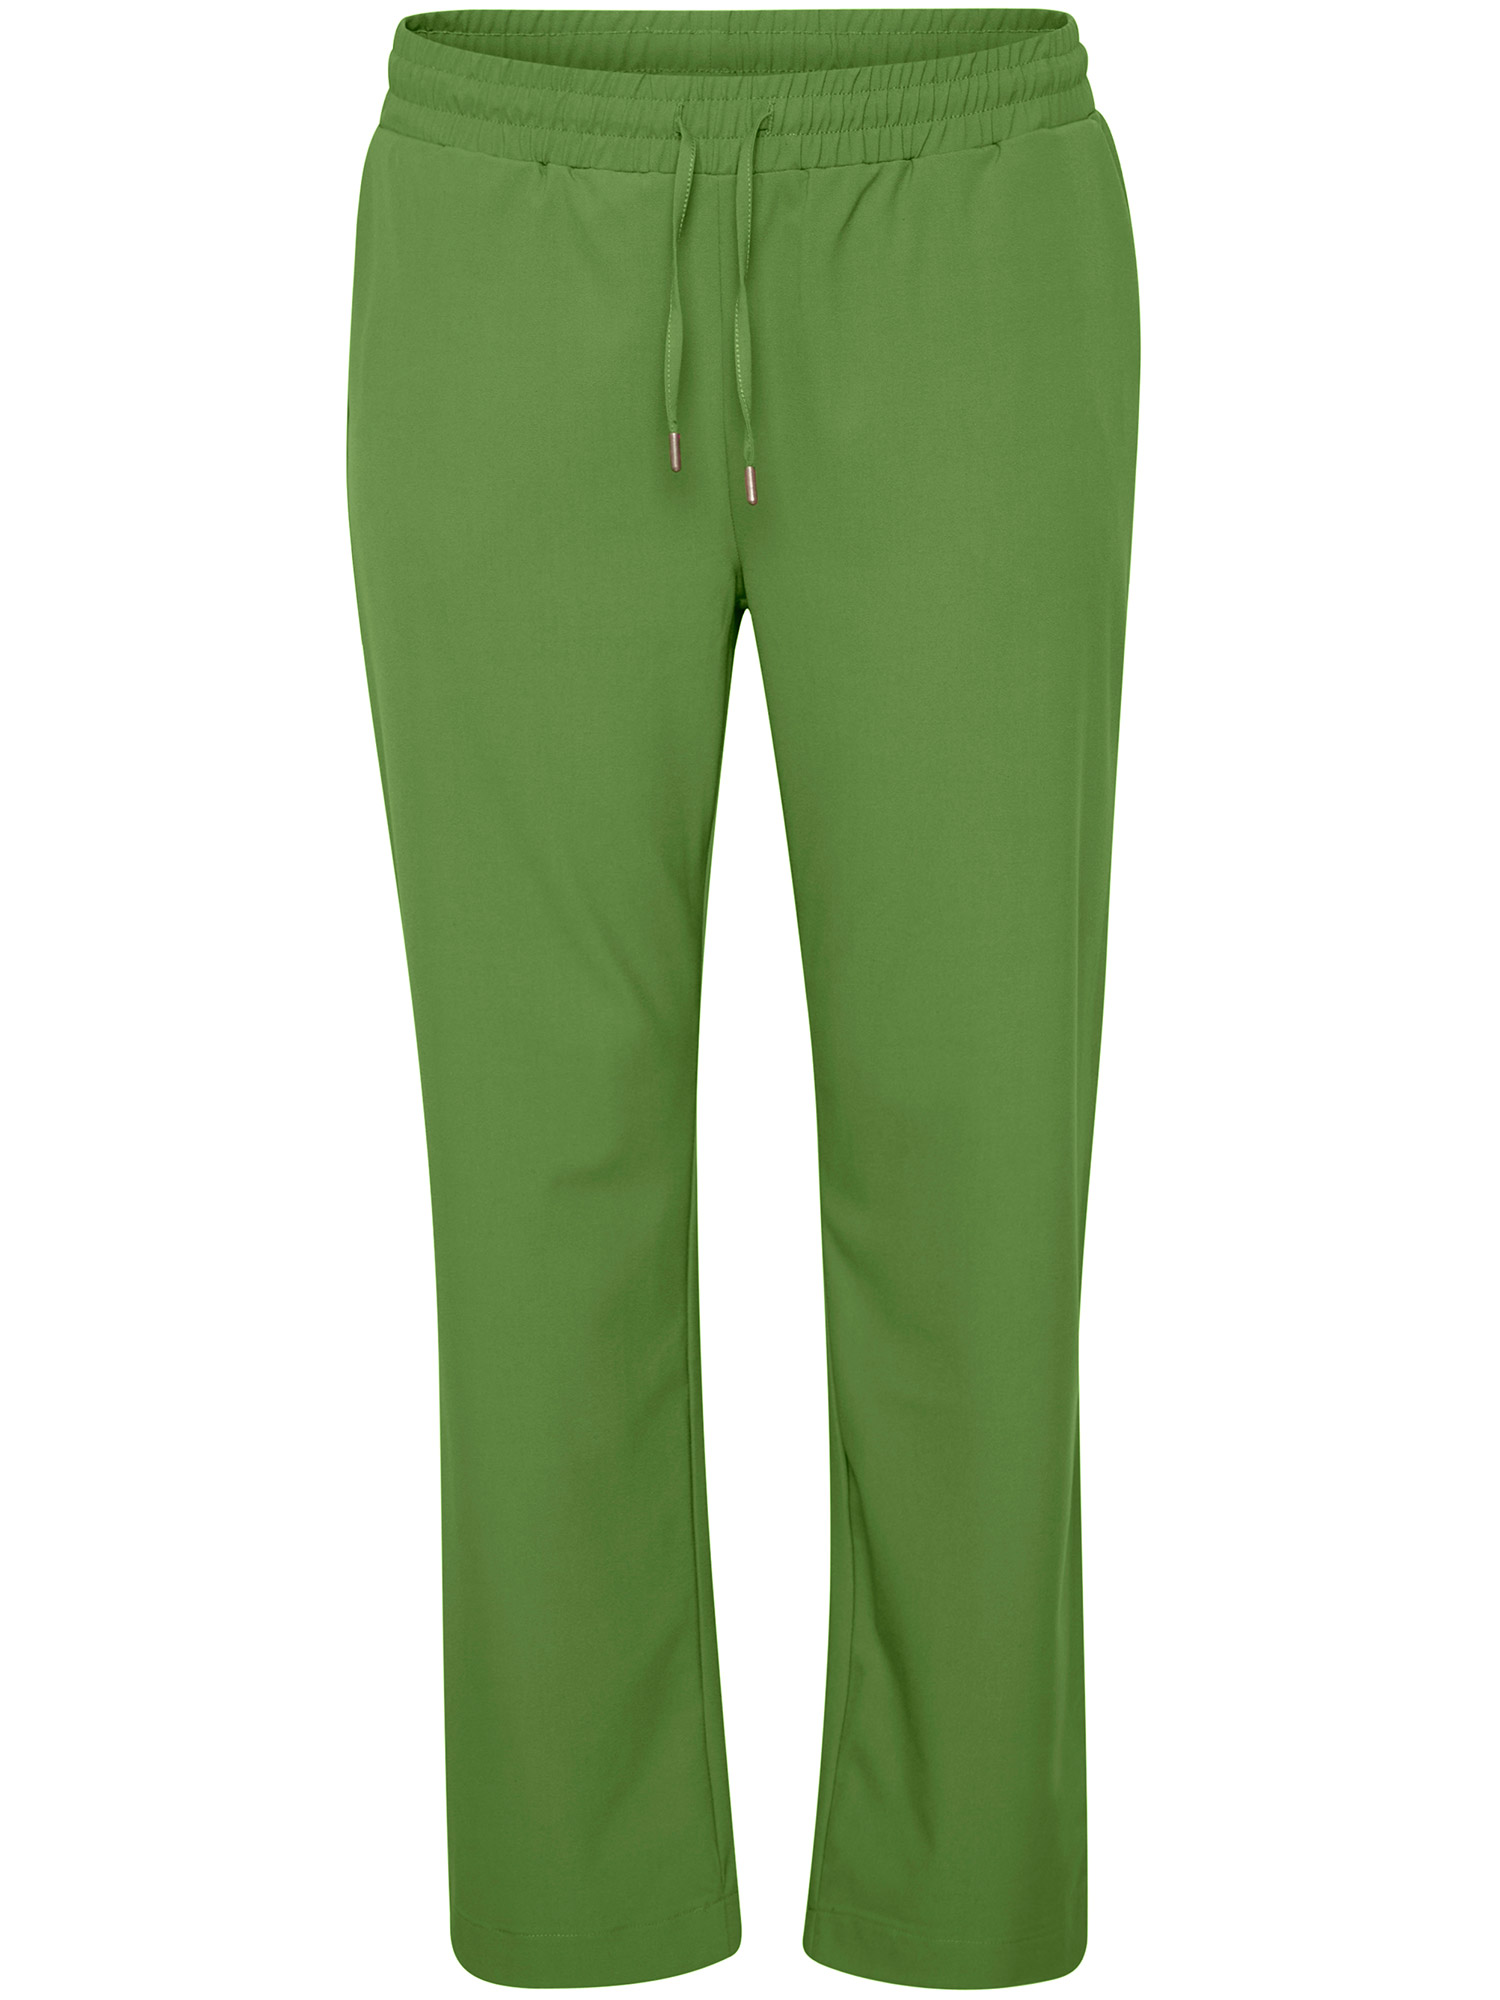 KC COLETTA - grønne bukser fra Kaffe Curve